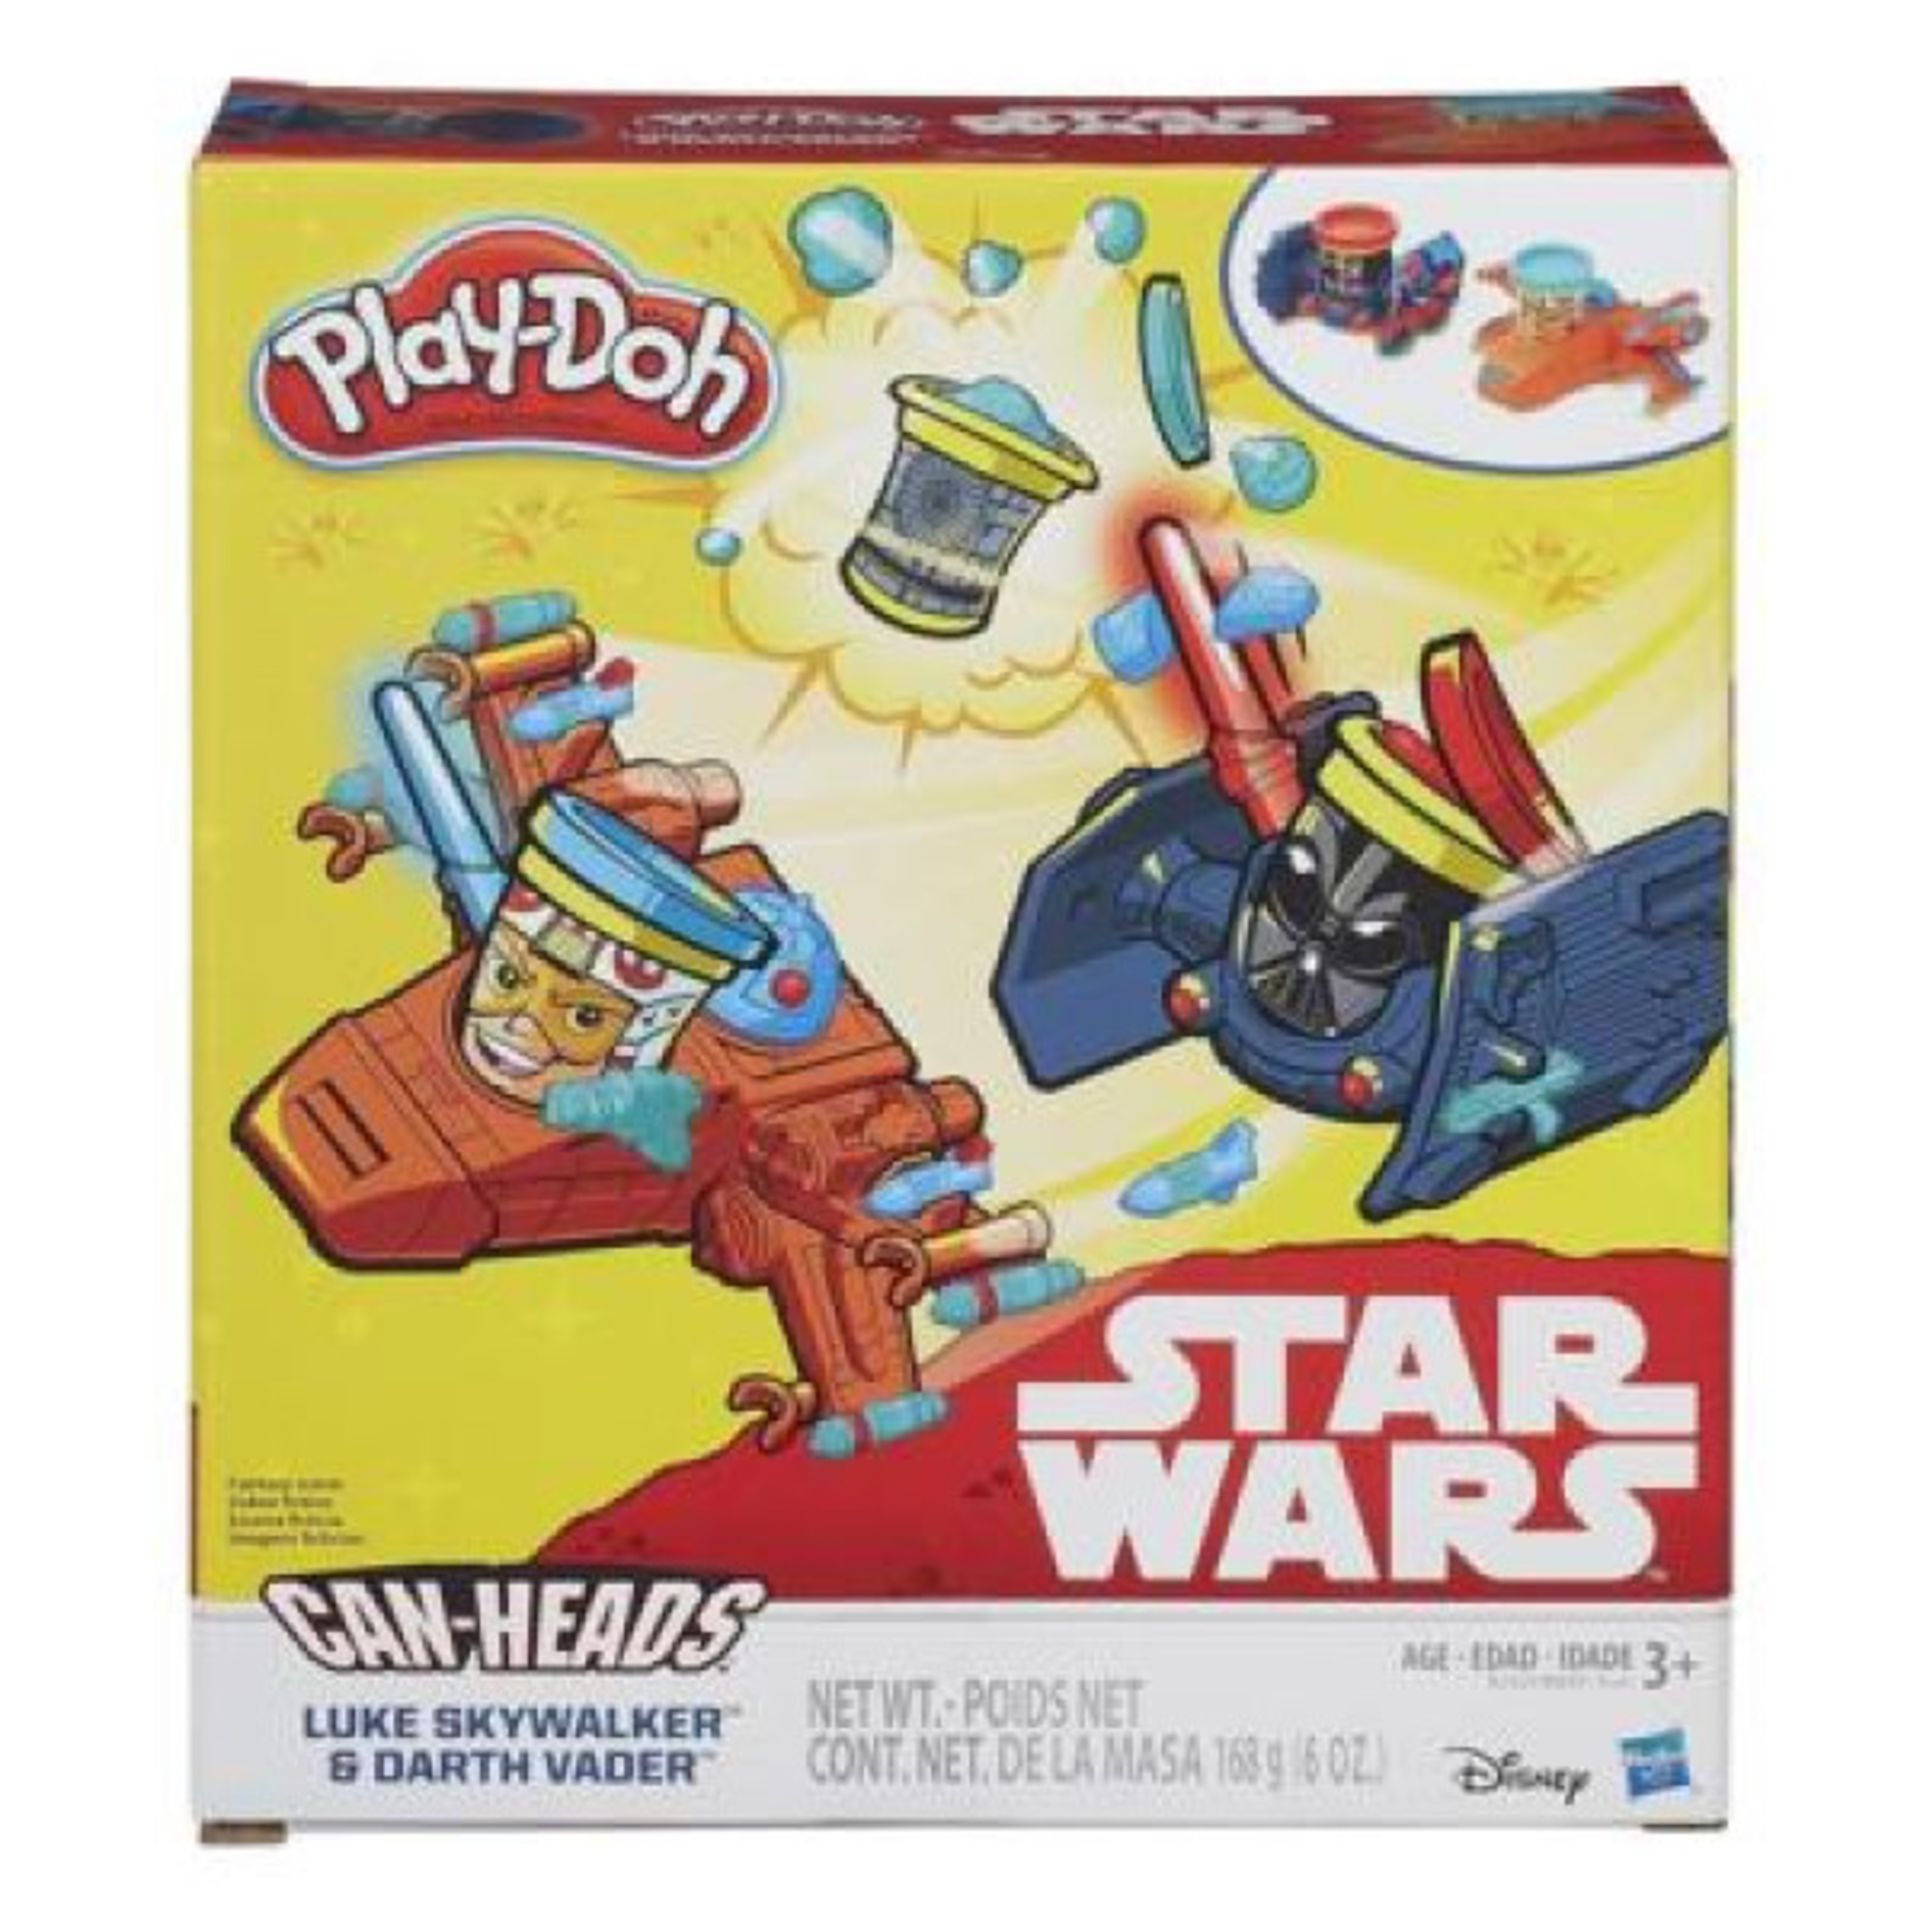 V Brand New Play-Doh Can Heads Star Wars Luke Skywalker & Darth Vader - eBay Price £11.80